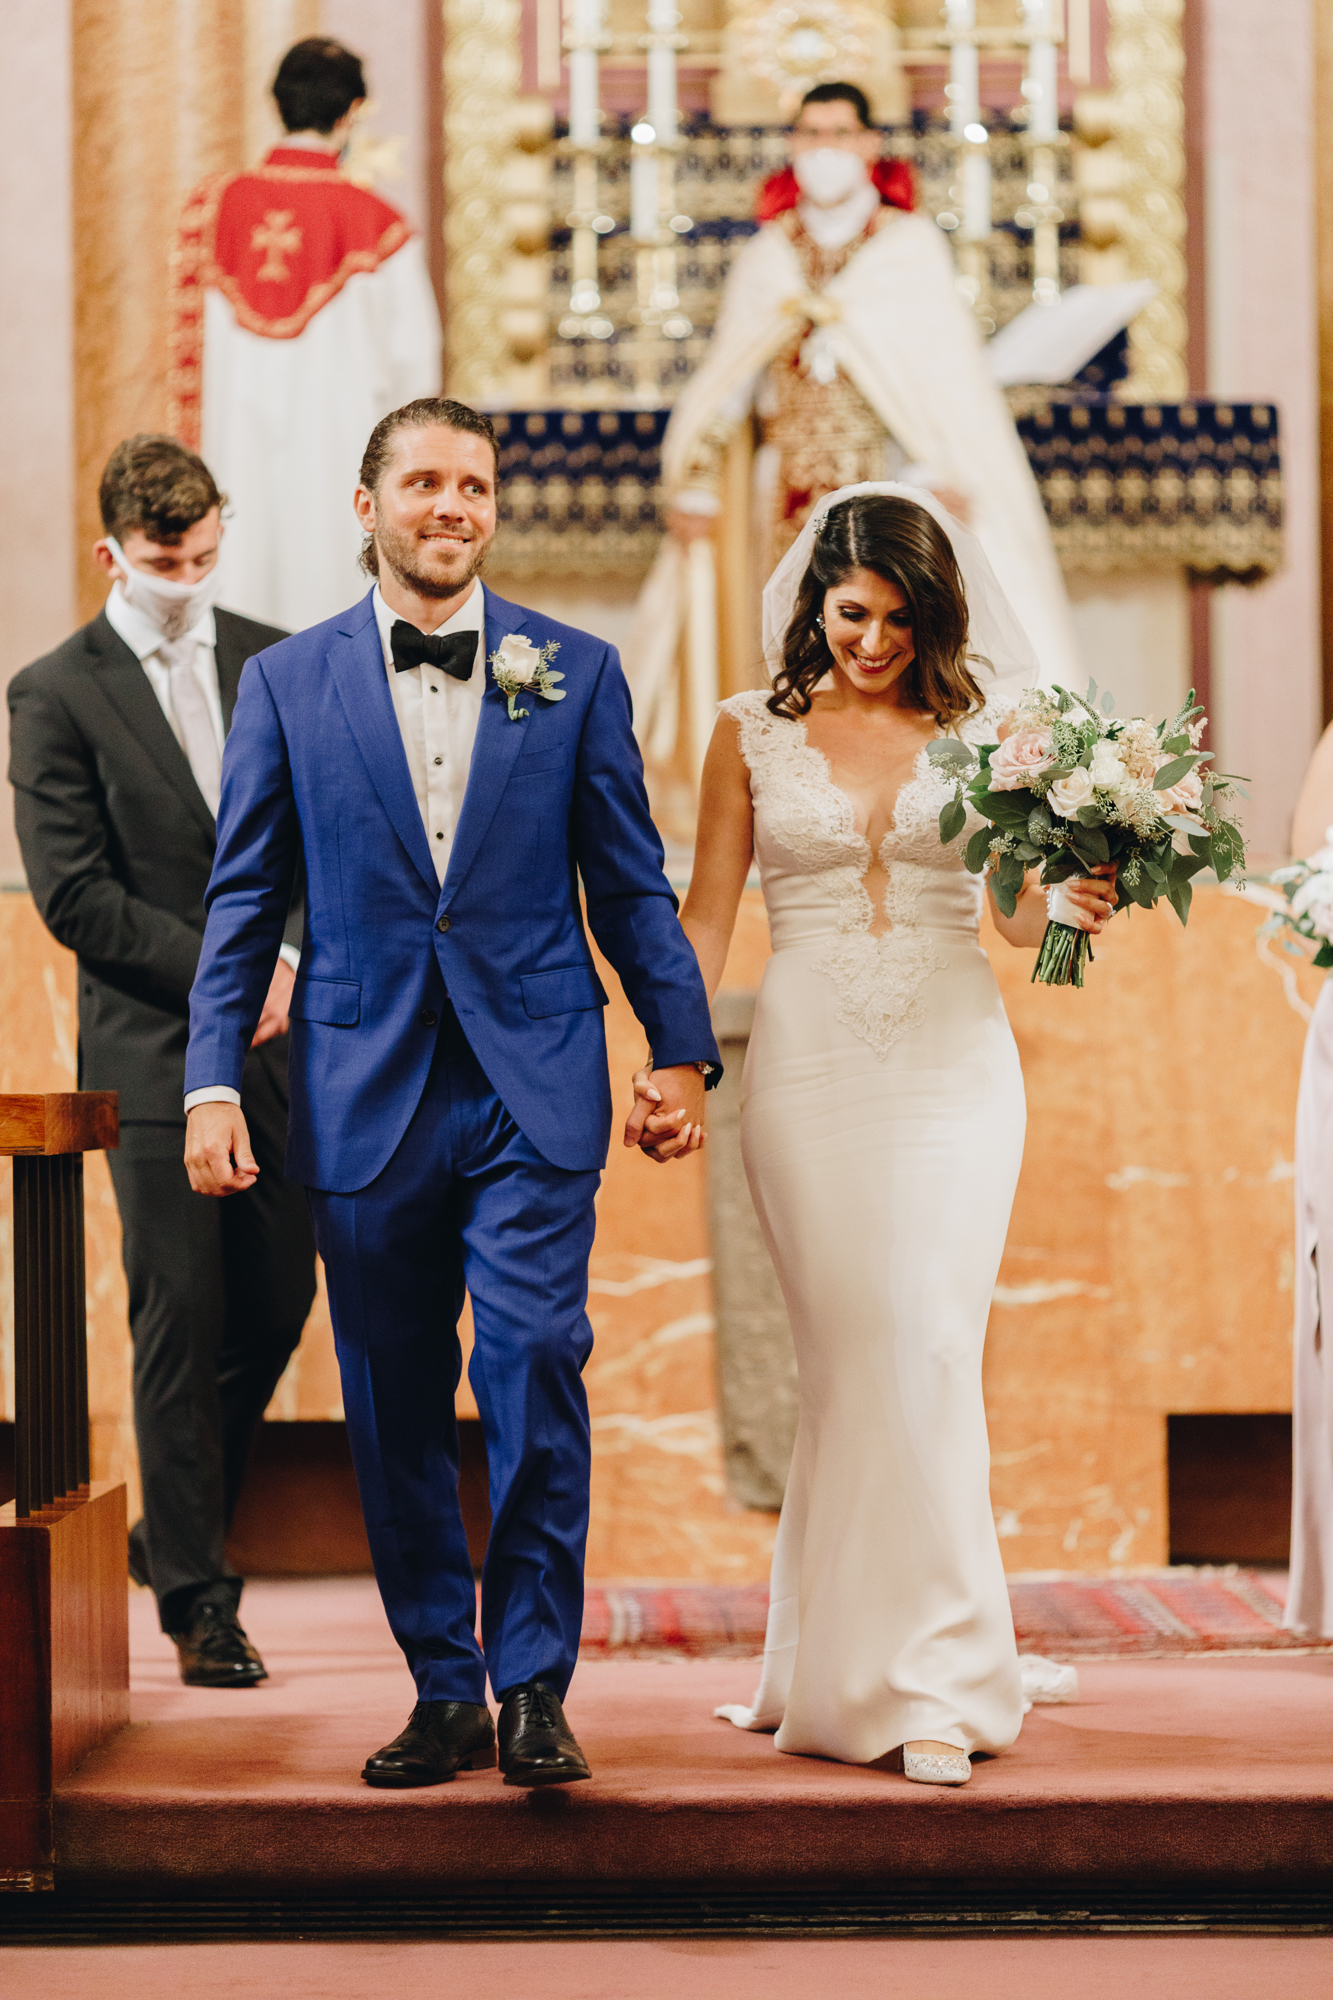 Wedding ceremony photos at Armenian Church in New York